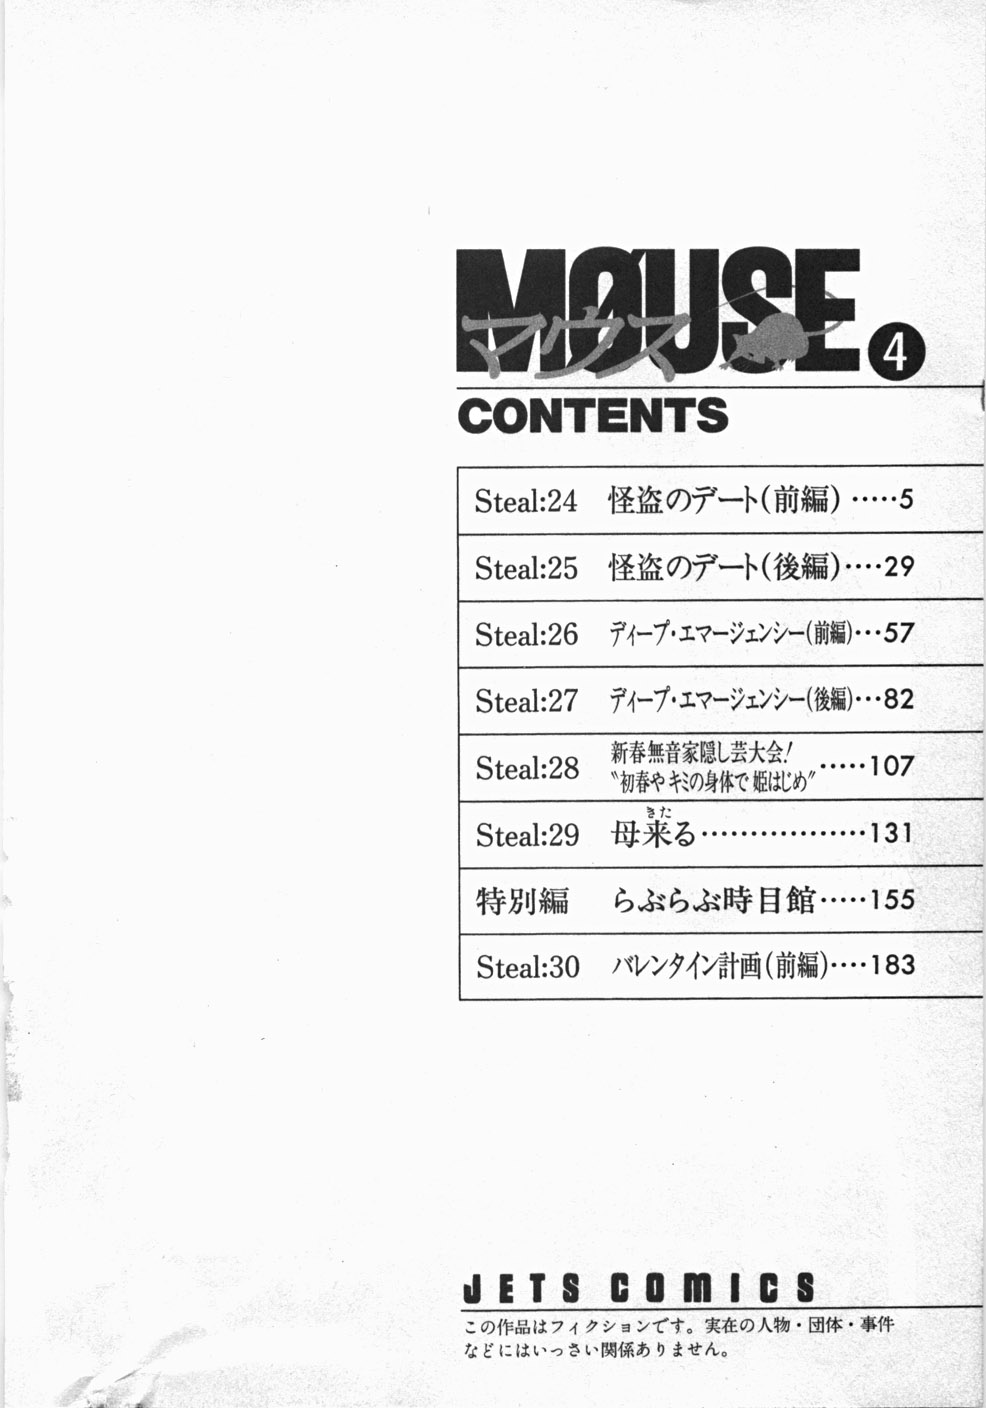 [Satoru Akahori &amp; Hiroshi Itaba] M&Oslash;USE Vol.04 